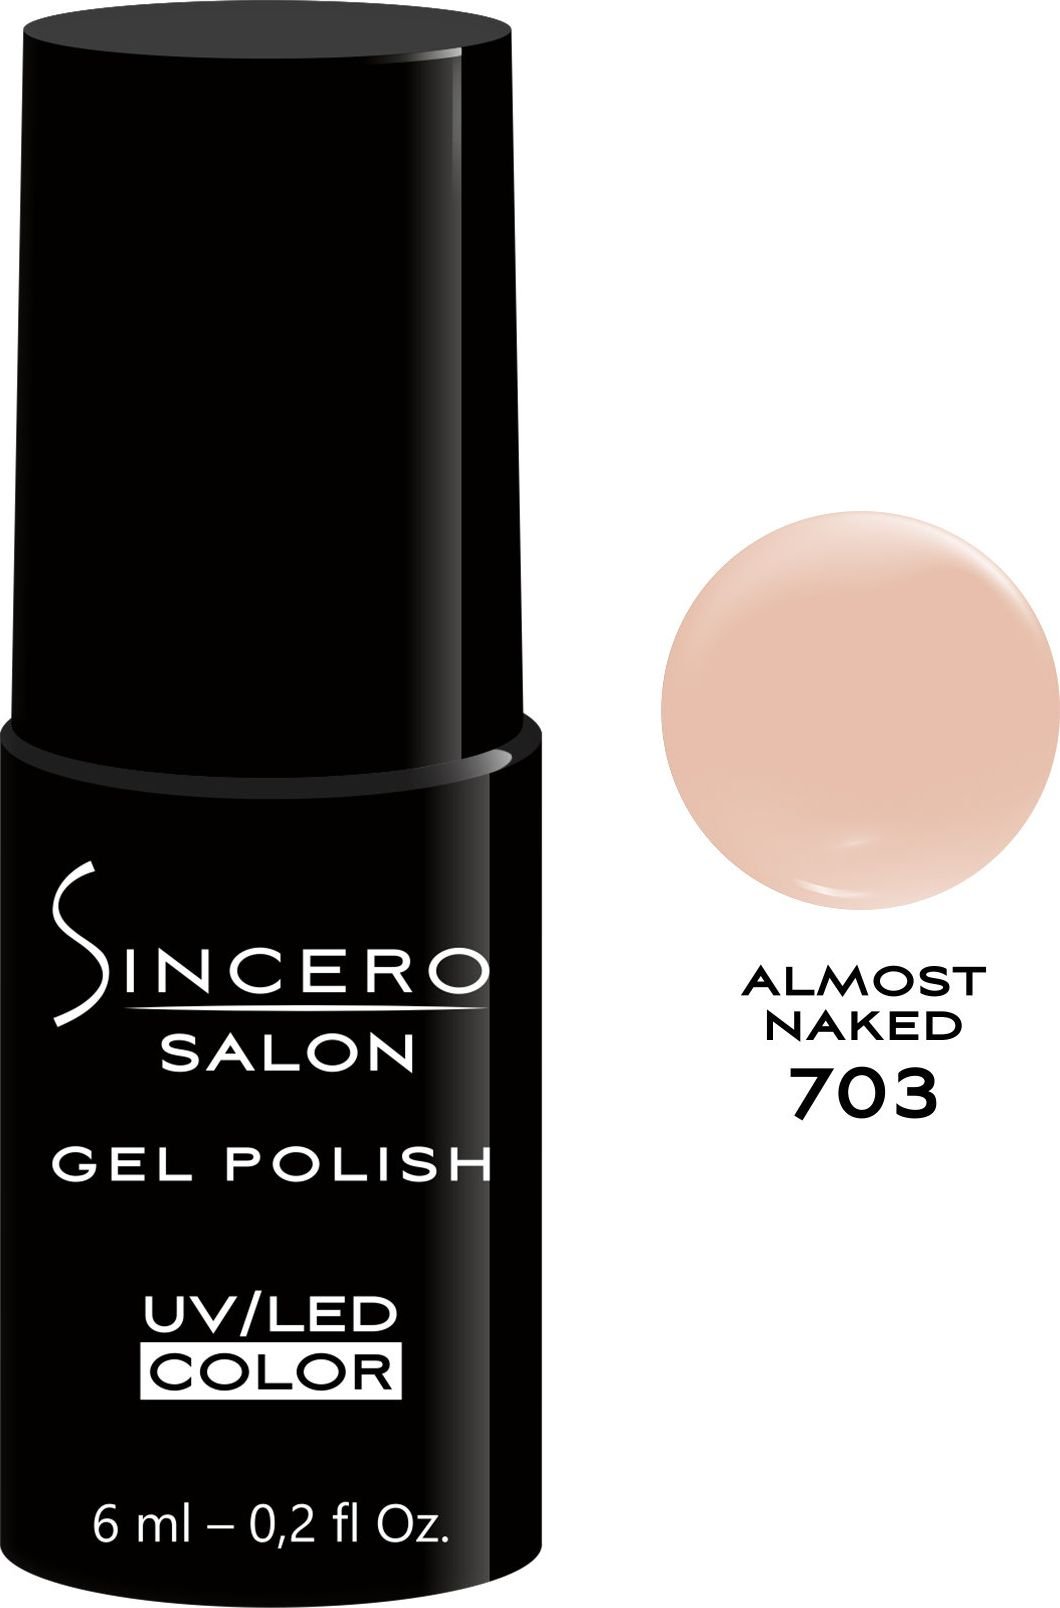 Sincero Salon Gel Polish UV/LED 703 Almost Naked 6ml